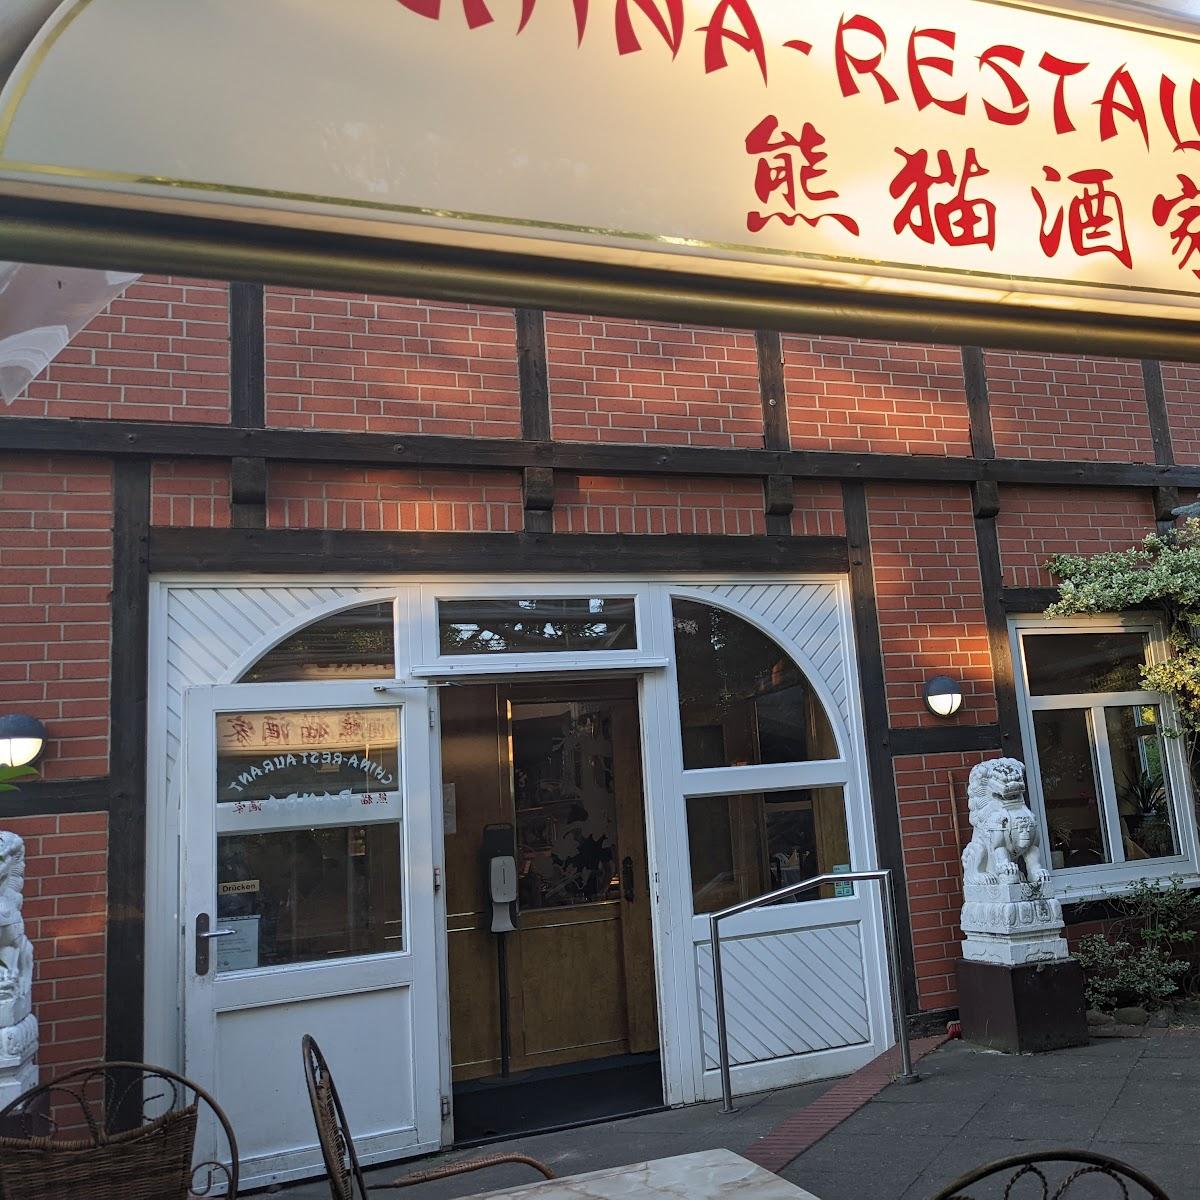 Restaurant "China Restaurant Panda" in Hannover